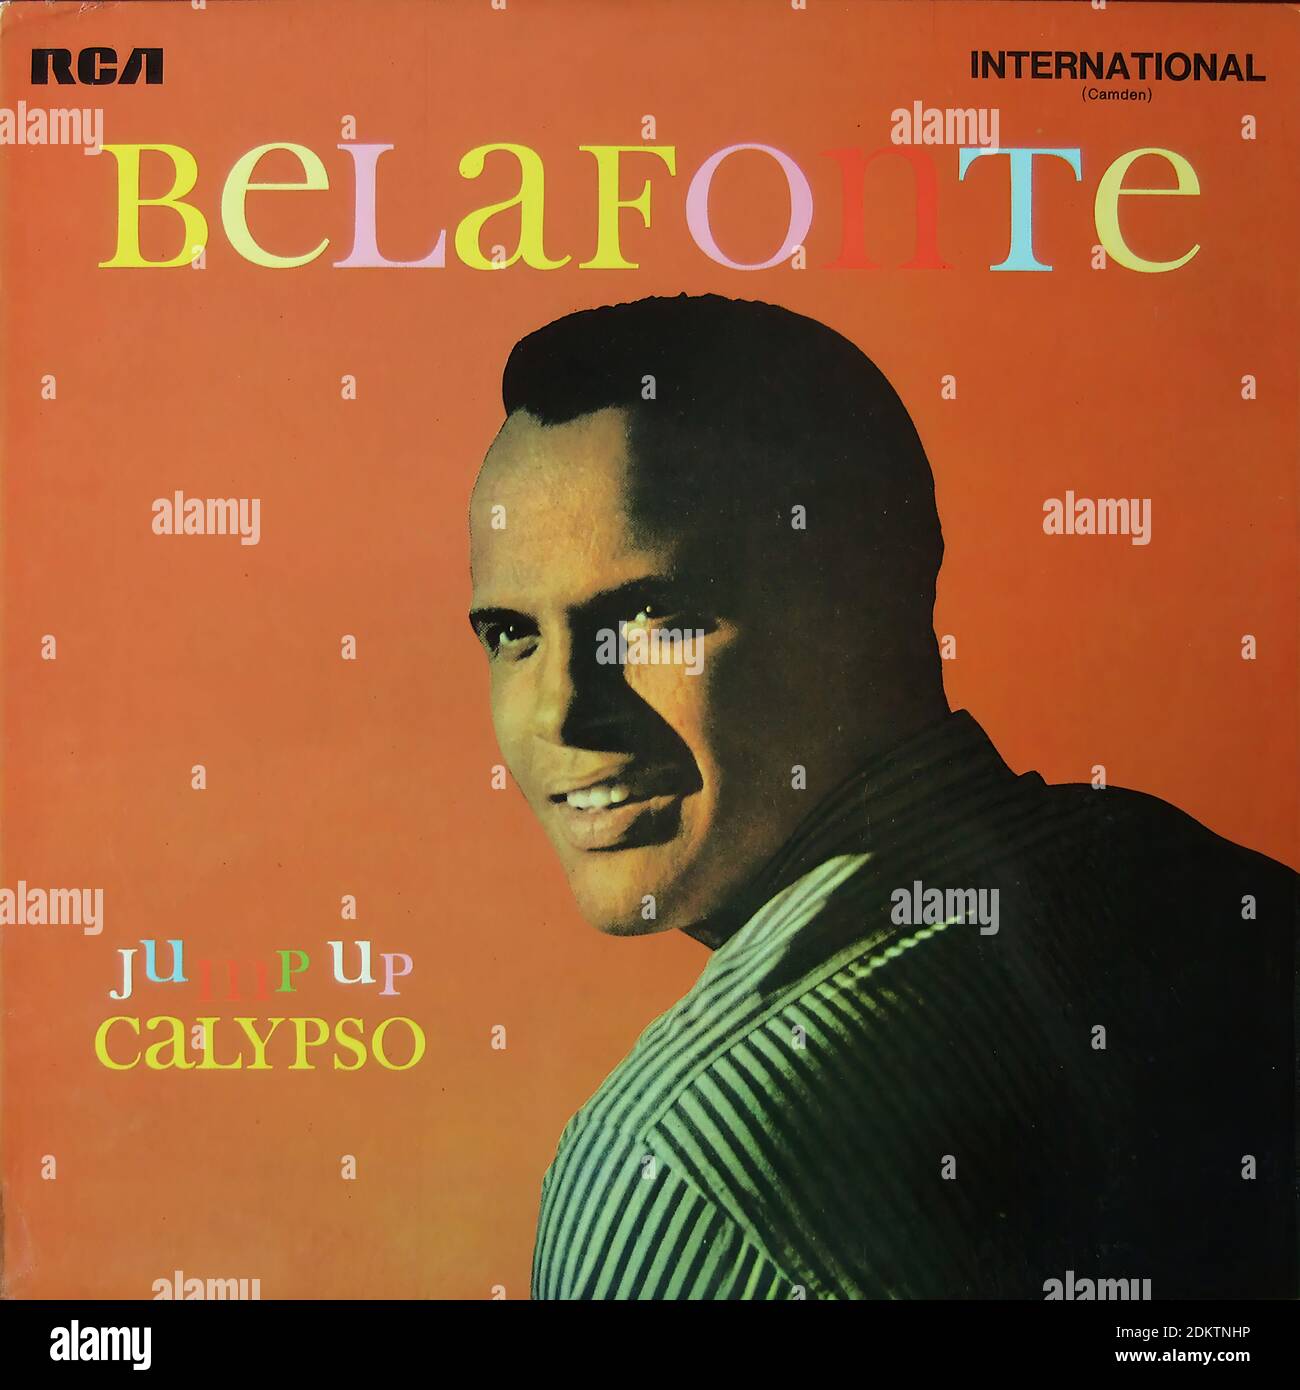 Harry Belafonte - Jump Up Calypso - Vintage vinyl album cover Stock Photo